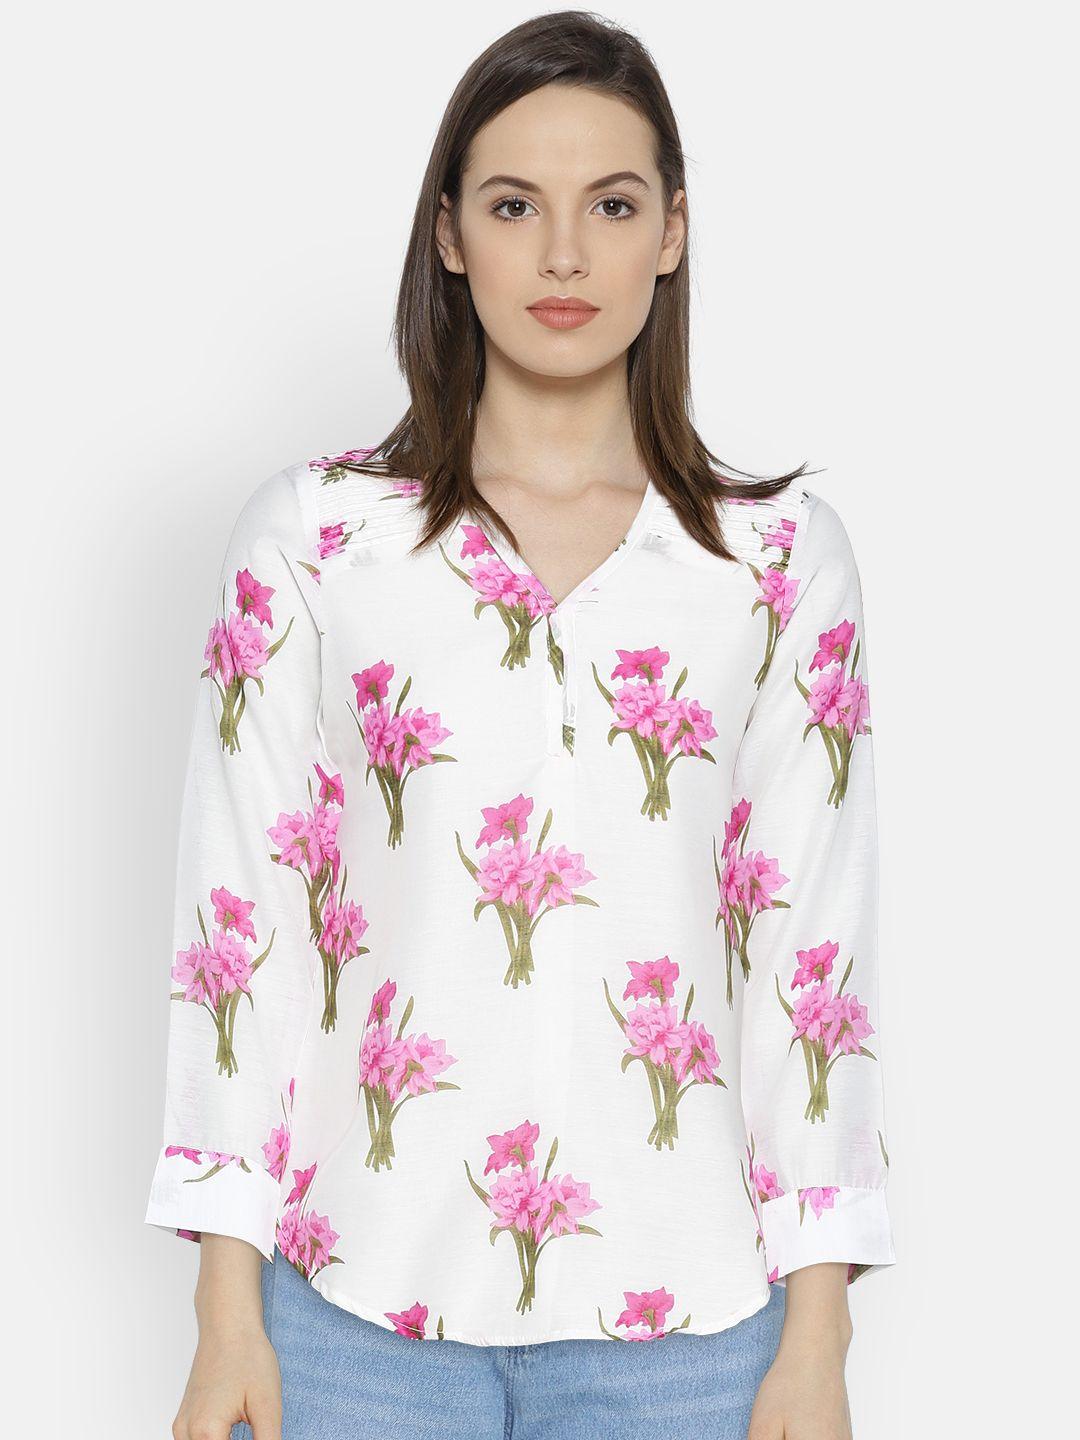 rangriti-women-off-white-&-pink-floral-print-top